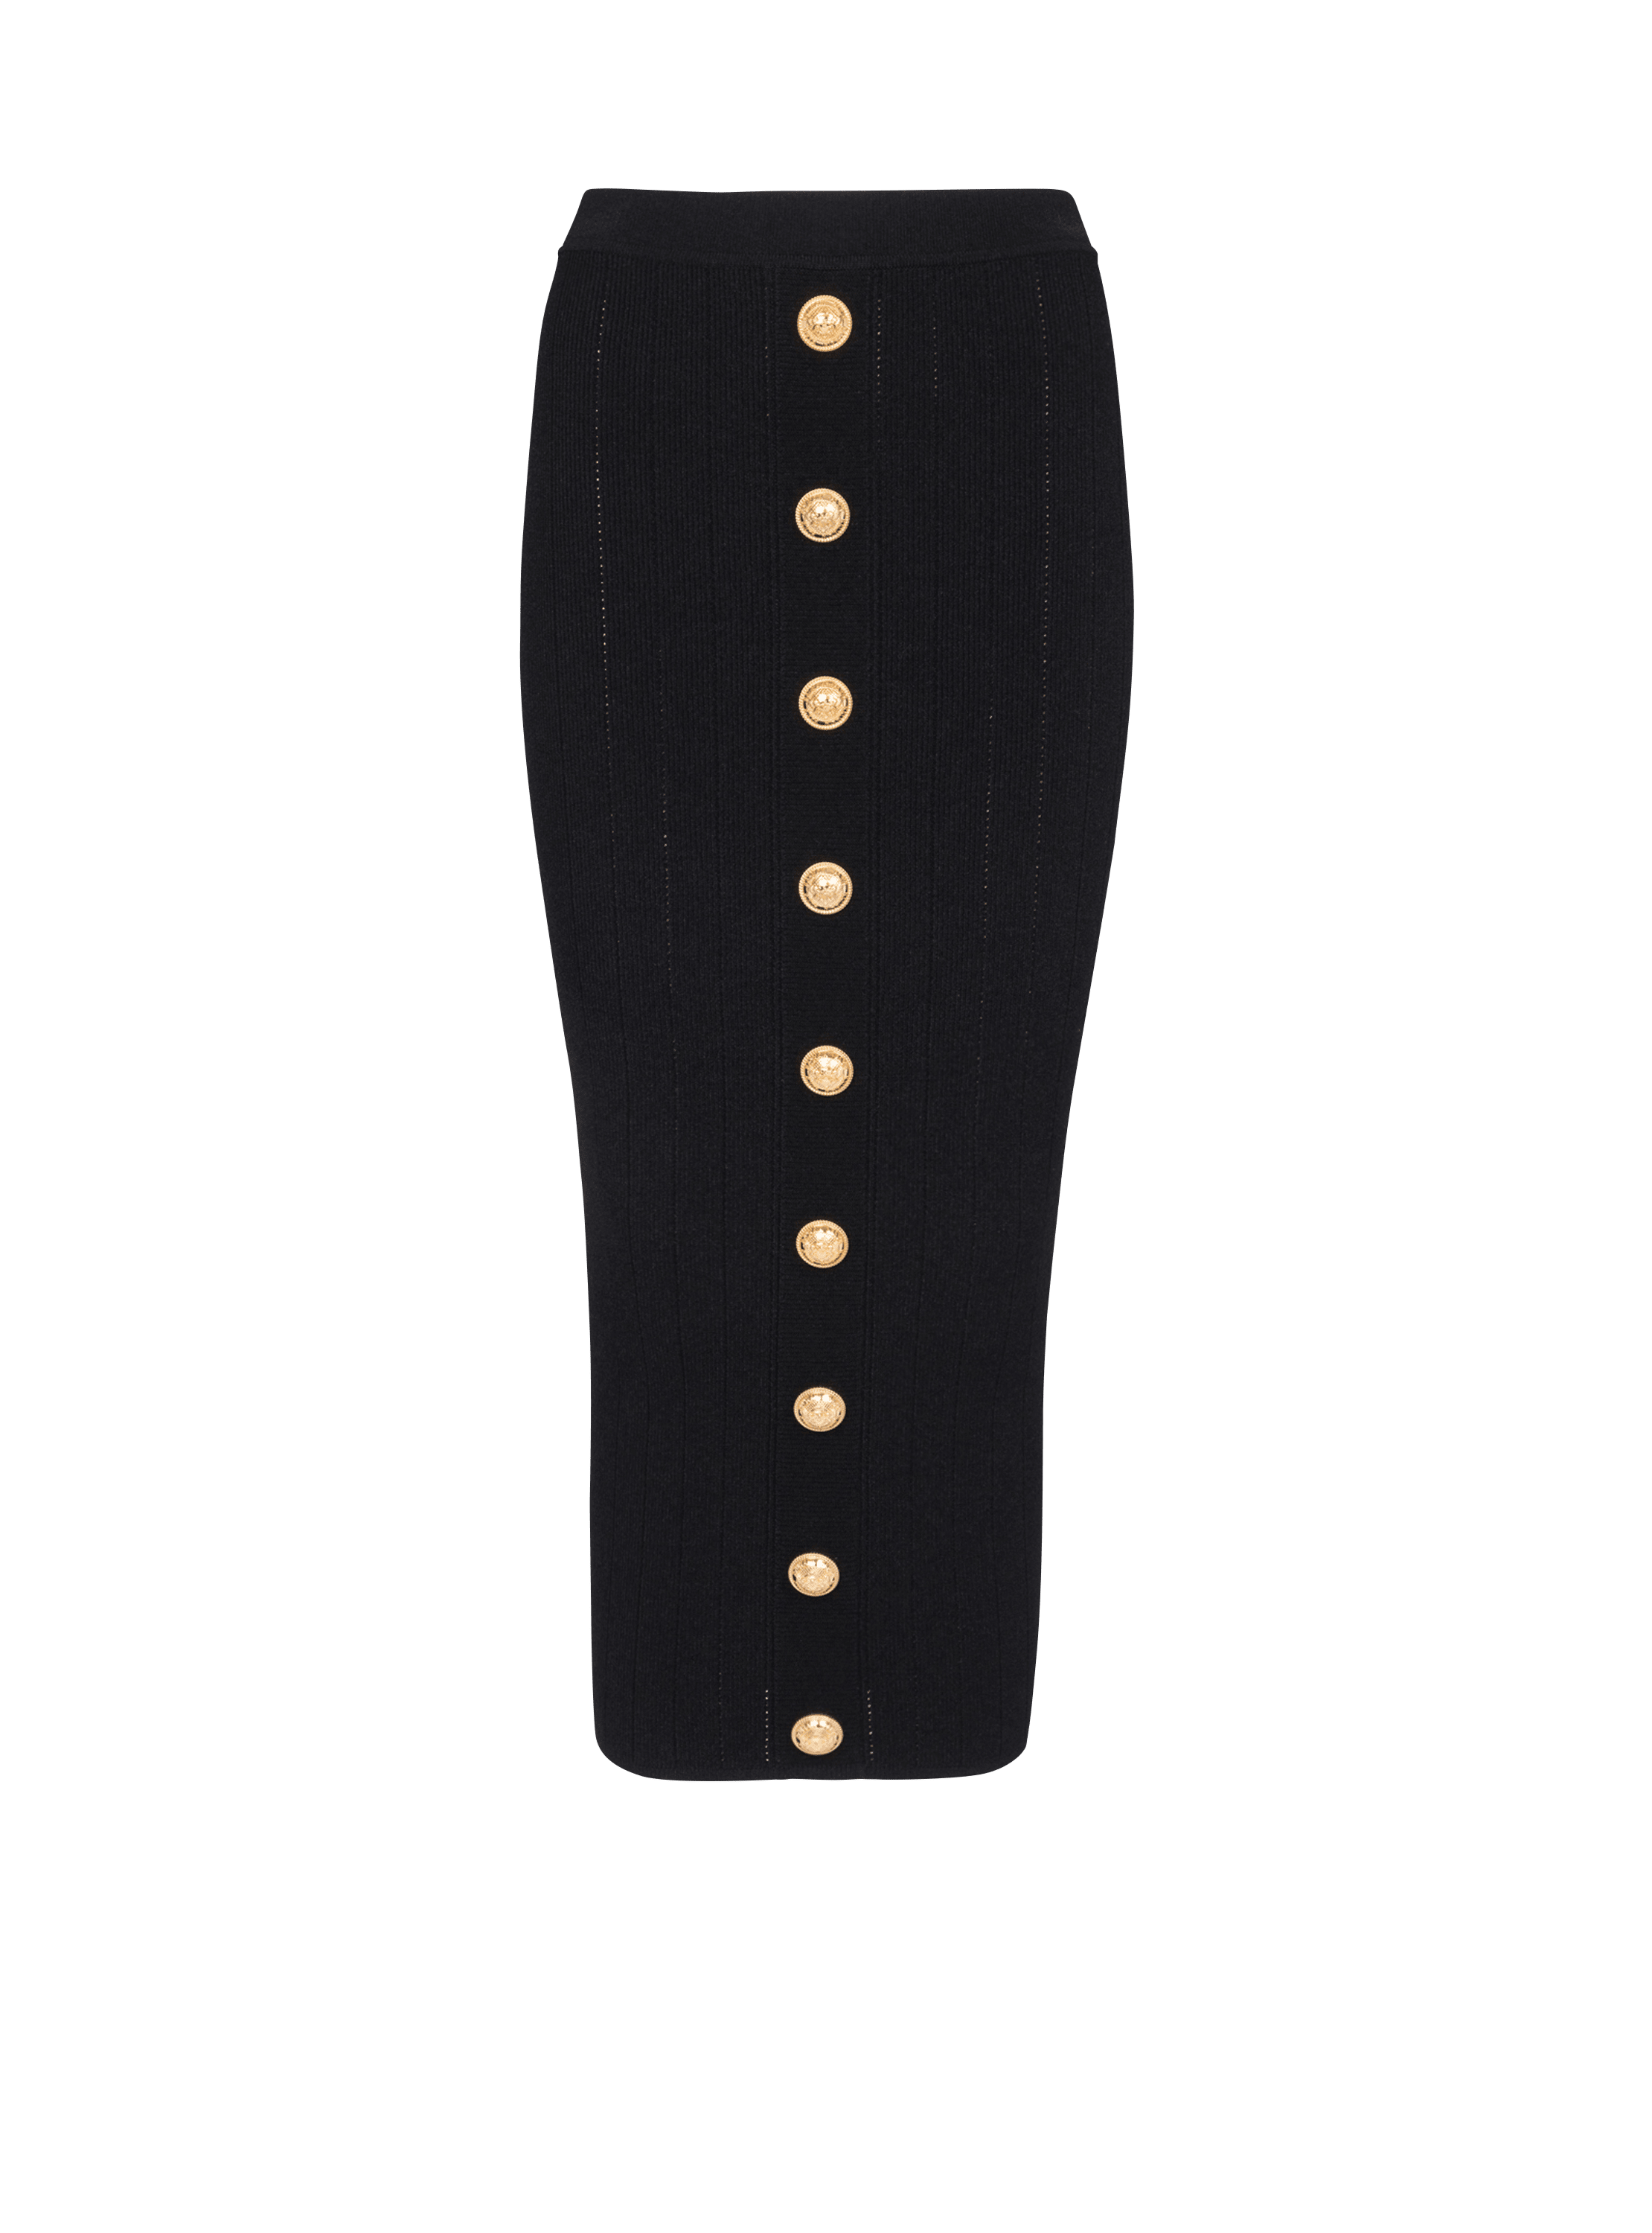 ALLOY SEWING PINS Black Detachable Waist Skirt Button Tightener